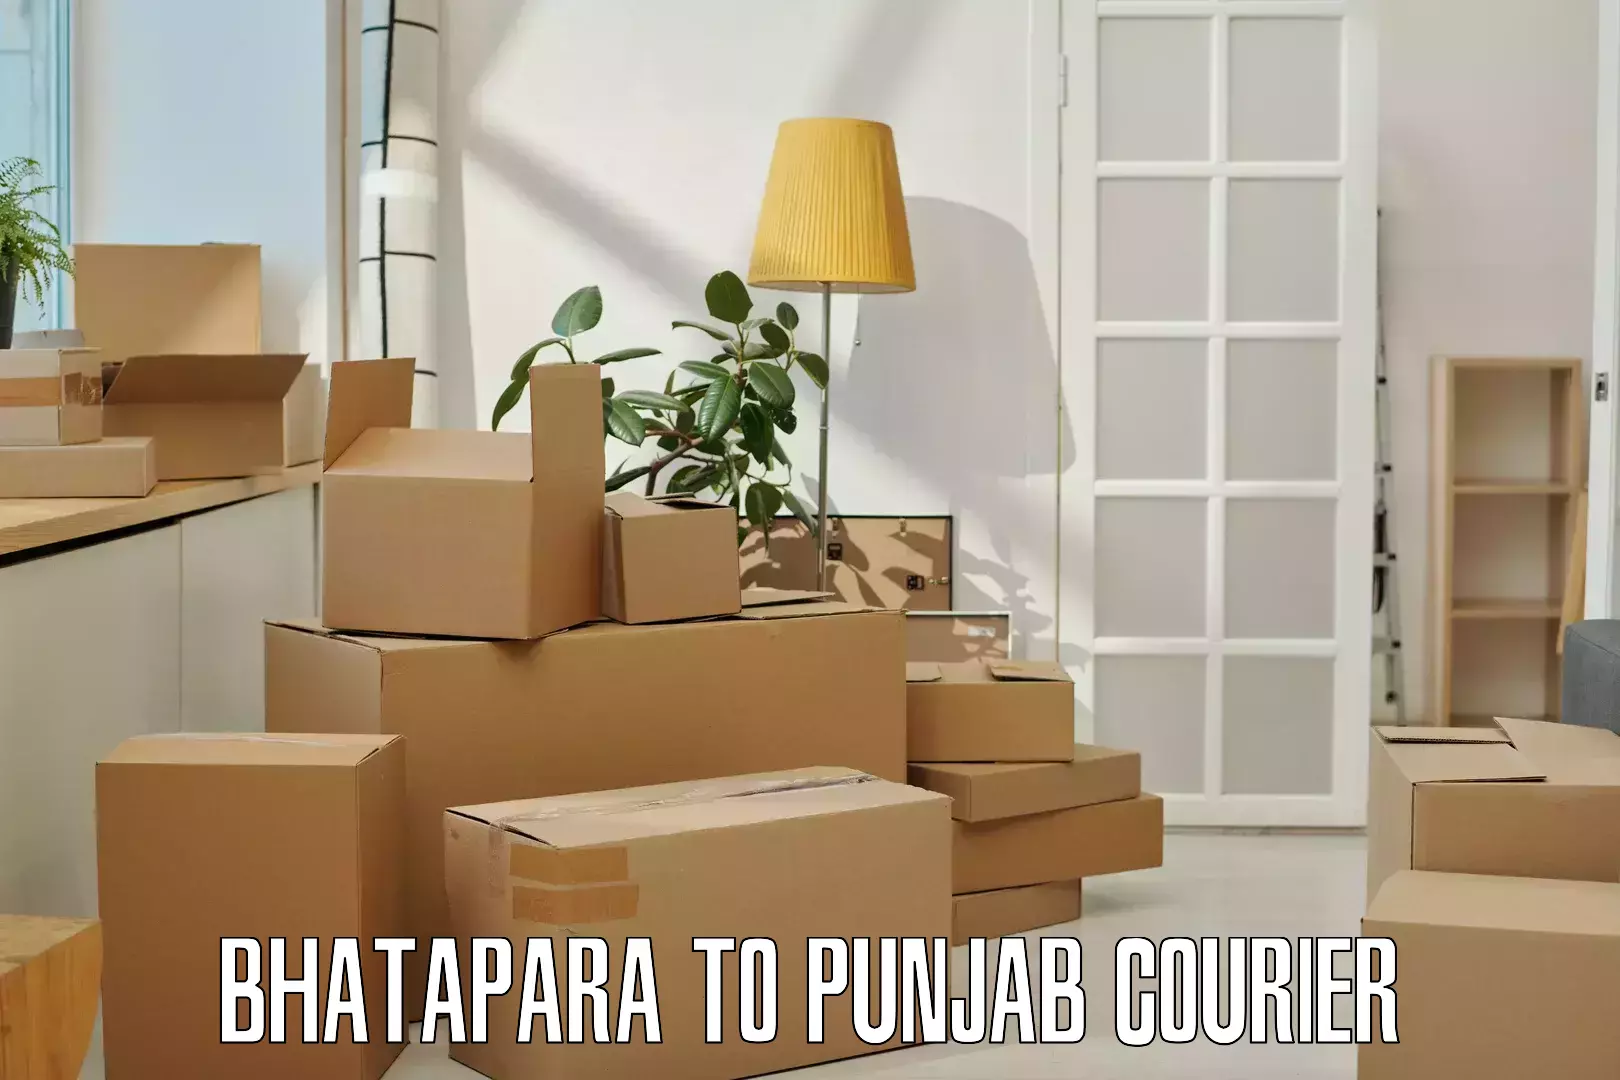 Subscription-based courier Bhatapara to Malerkotla